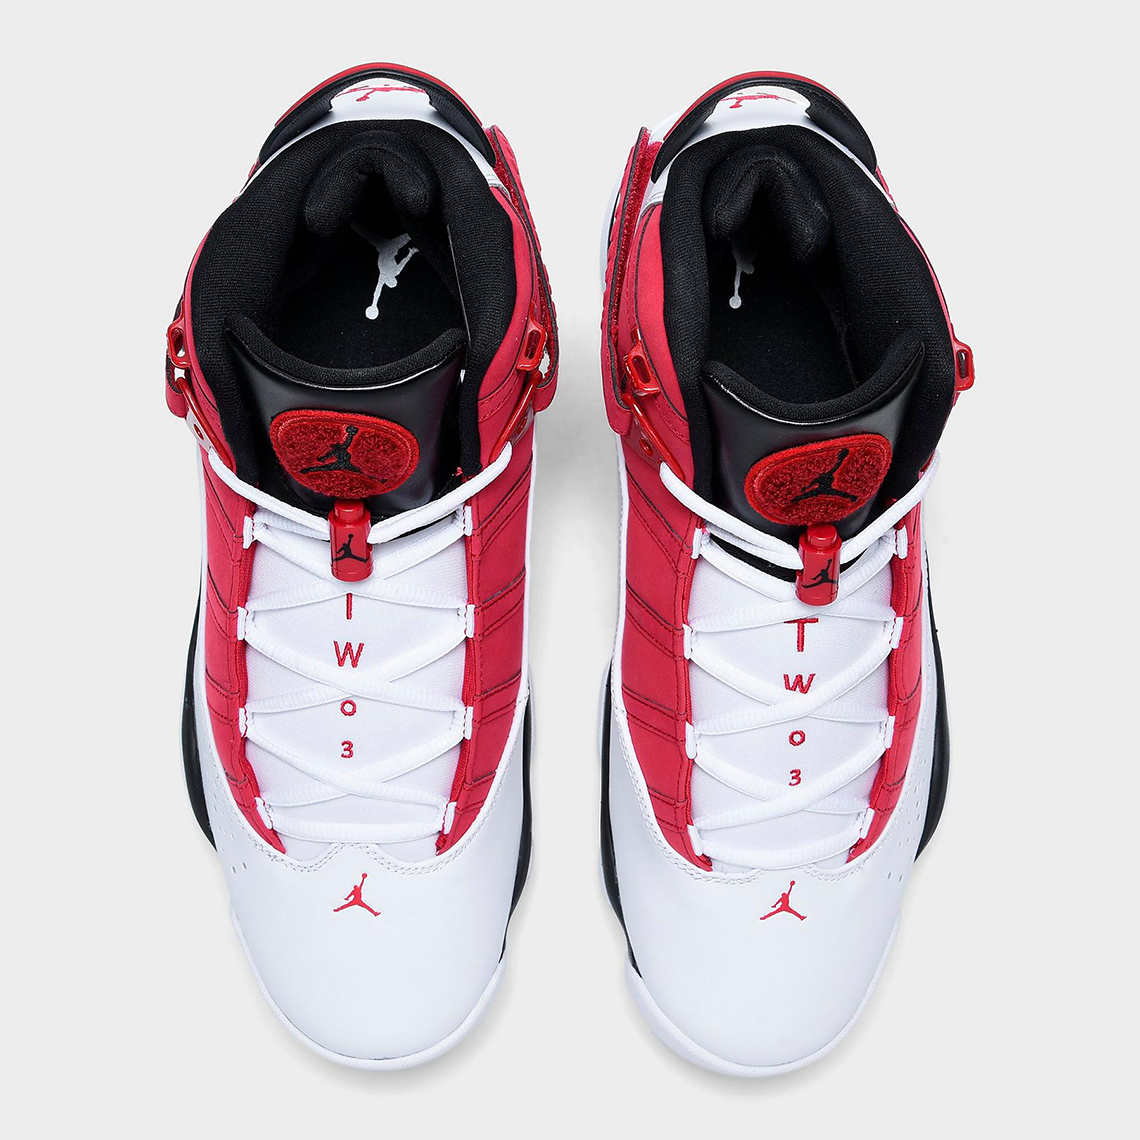 Jordan 6 Rings White Black Red 322992-106 | SneakerNews.com